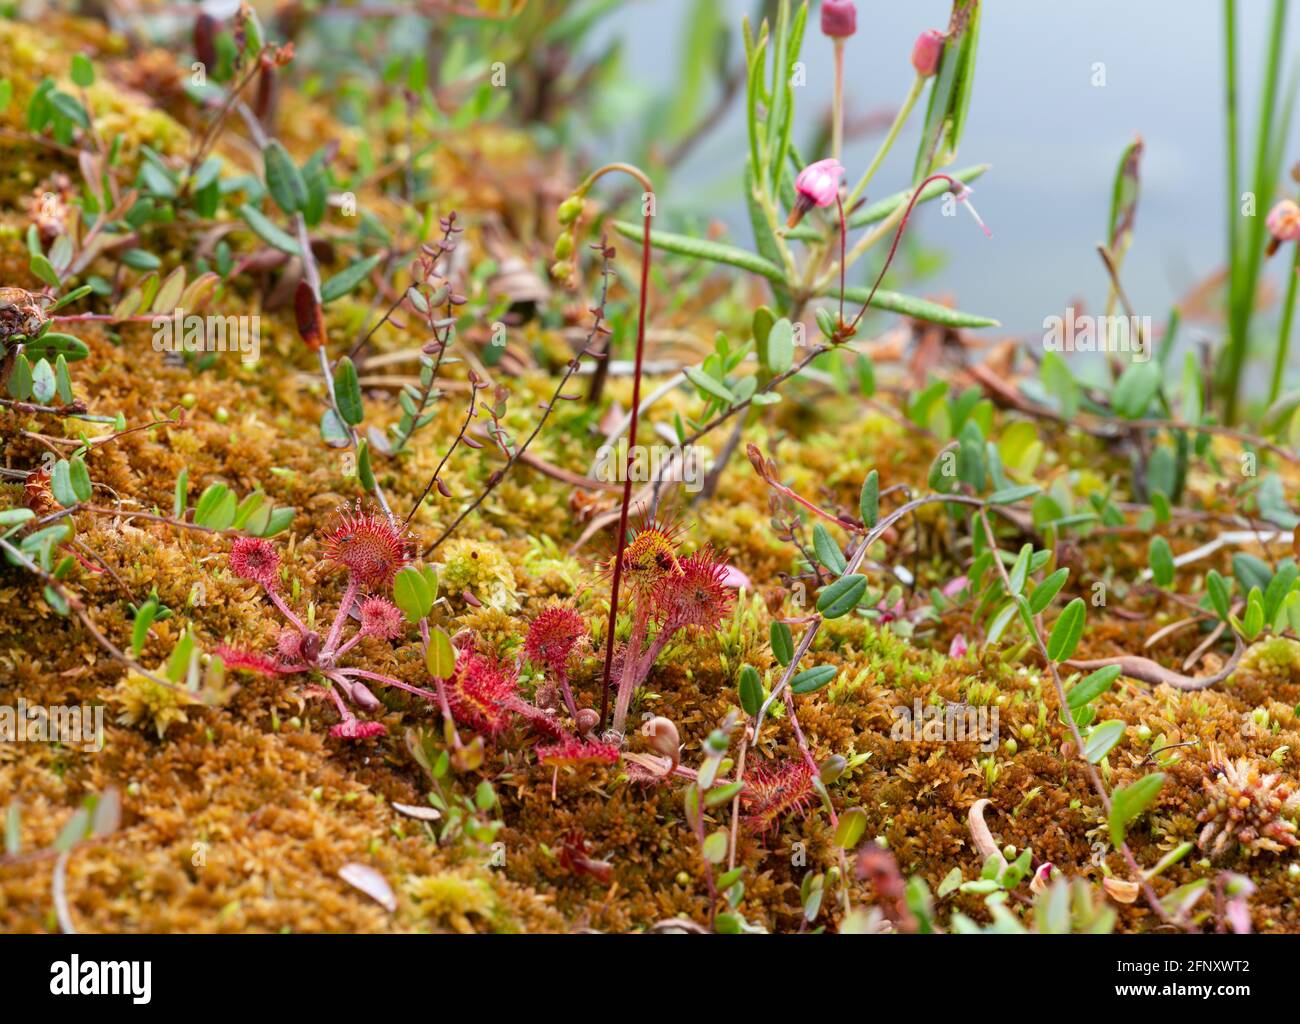 Round-leaved sundew, Drosera rotundifolia plants in natural wet environment Stock Photo